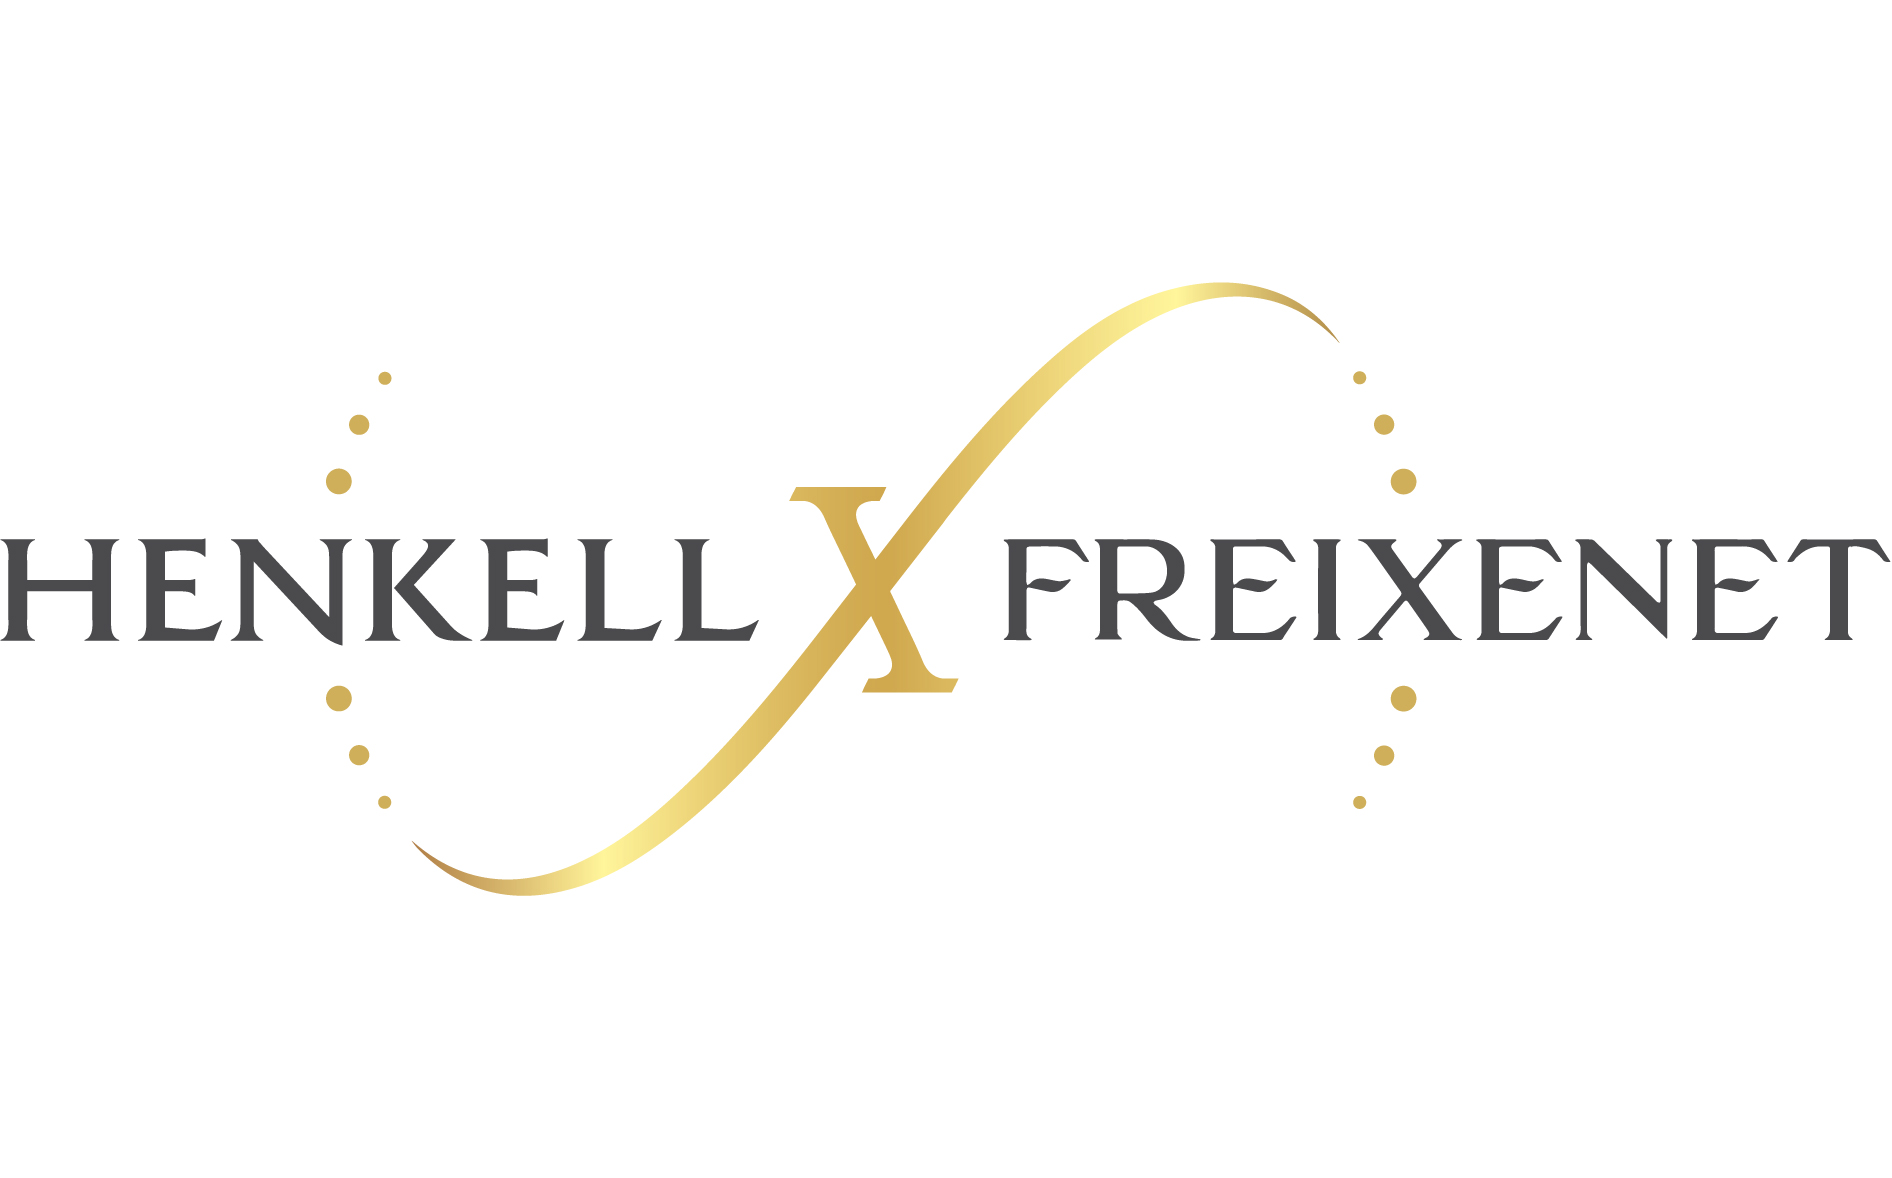 Henkell & Co and Freixenet to be renamed Henkell Freixenet